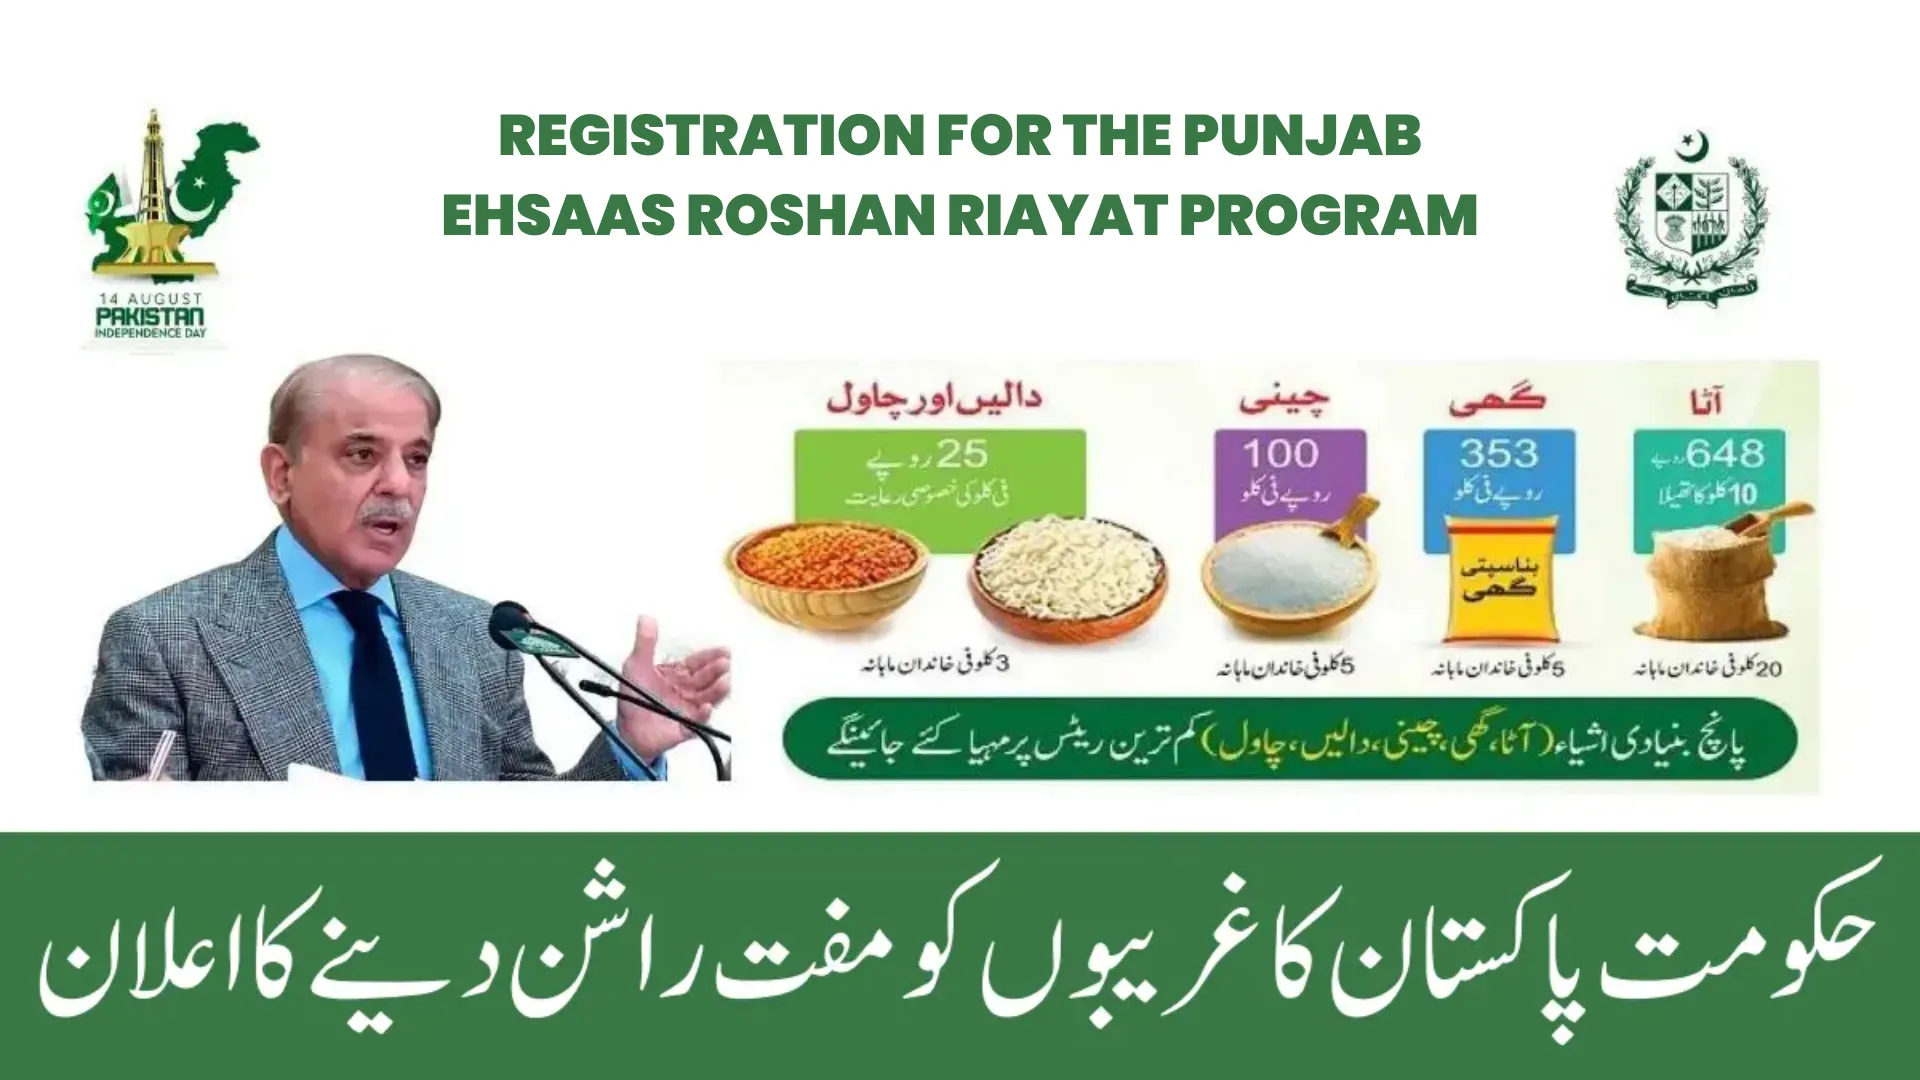 Registration for the Punjab Ehsaas roshan Riayat Program